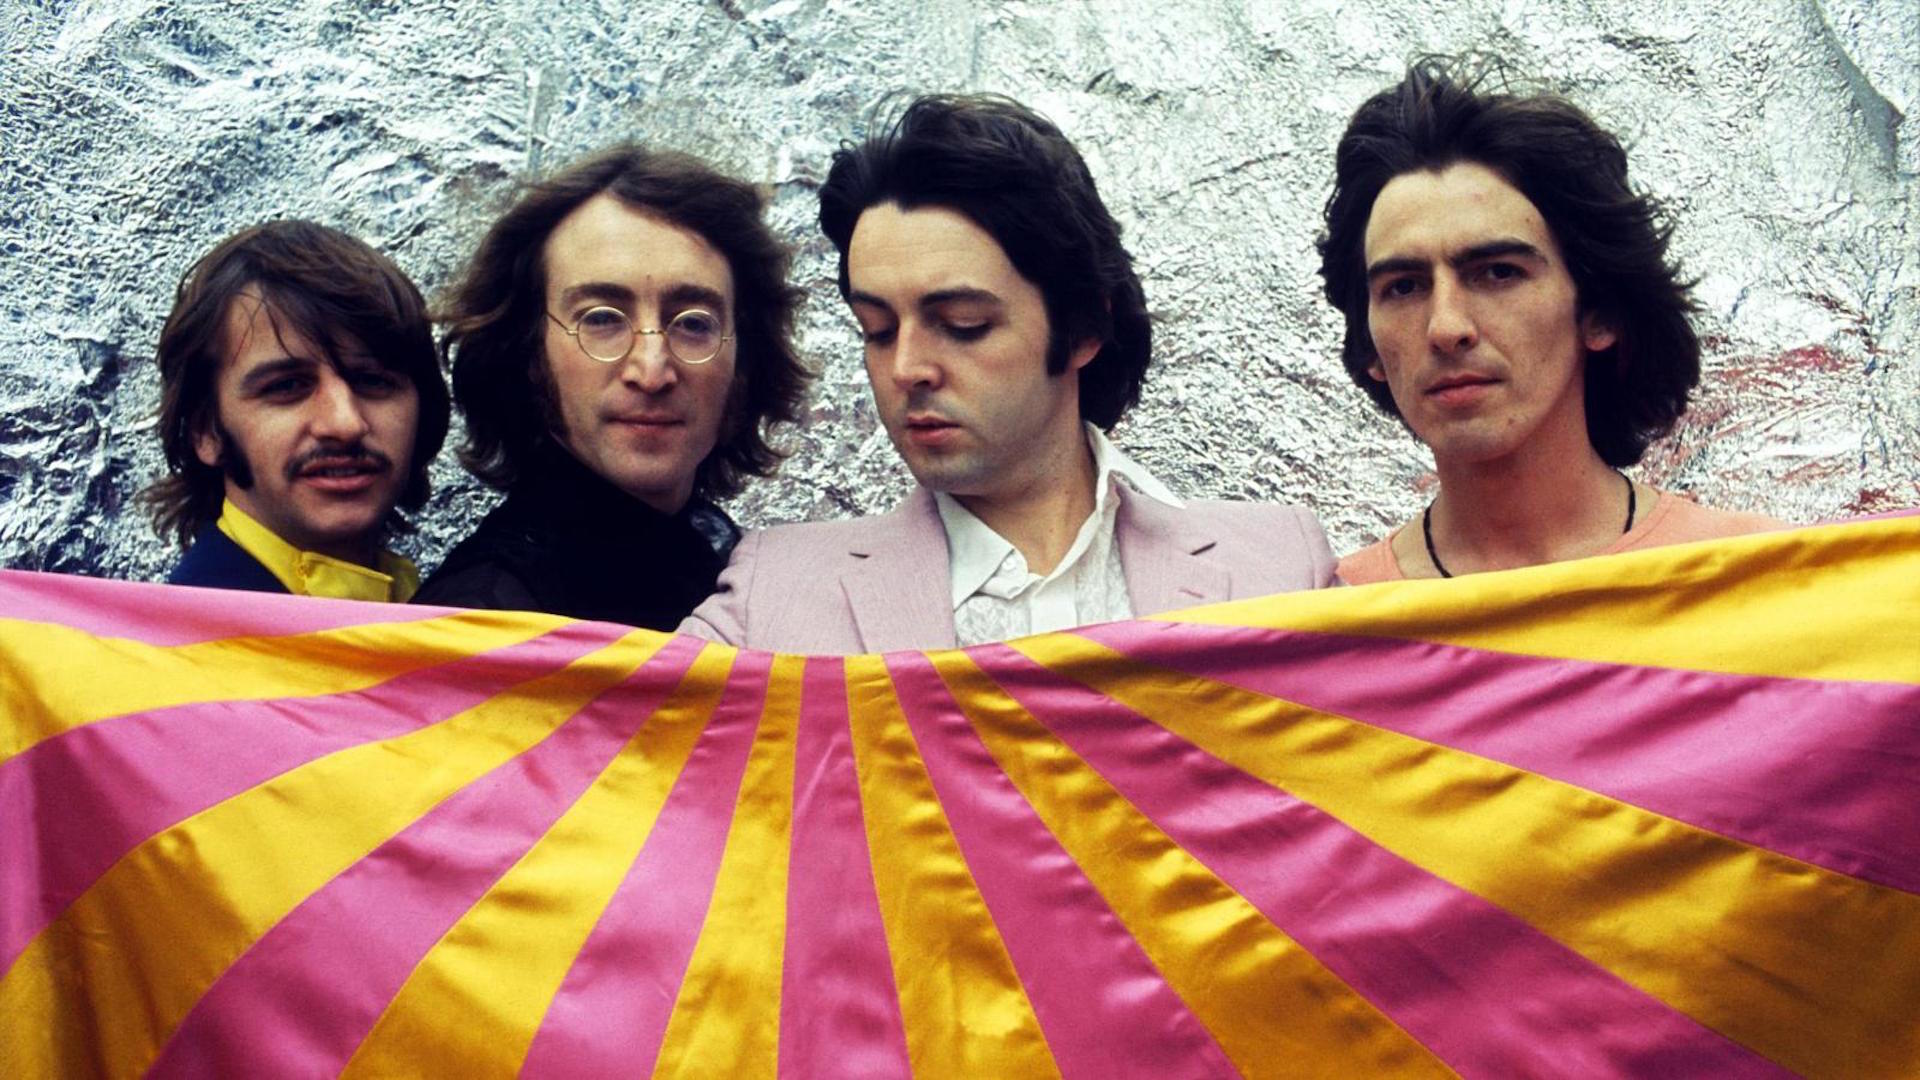 Желтая в песне битлз. The Beatles. Битлз 1968. Beatles фотосессия 1968. The Beatles ed Sullivan show.